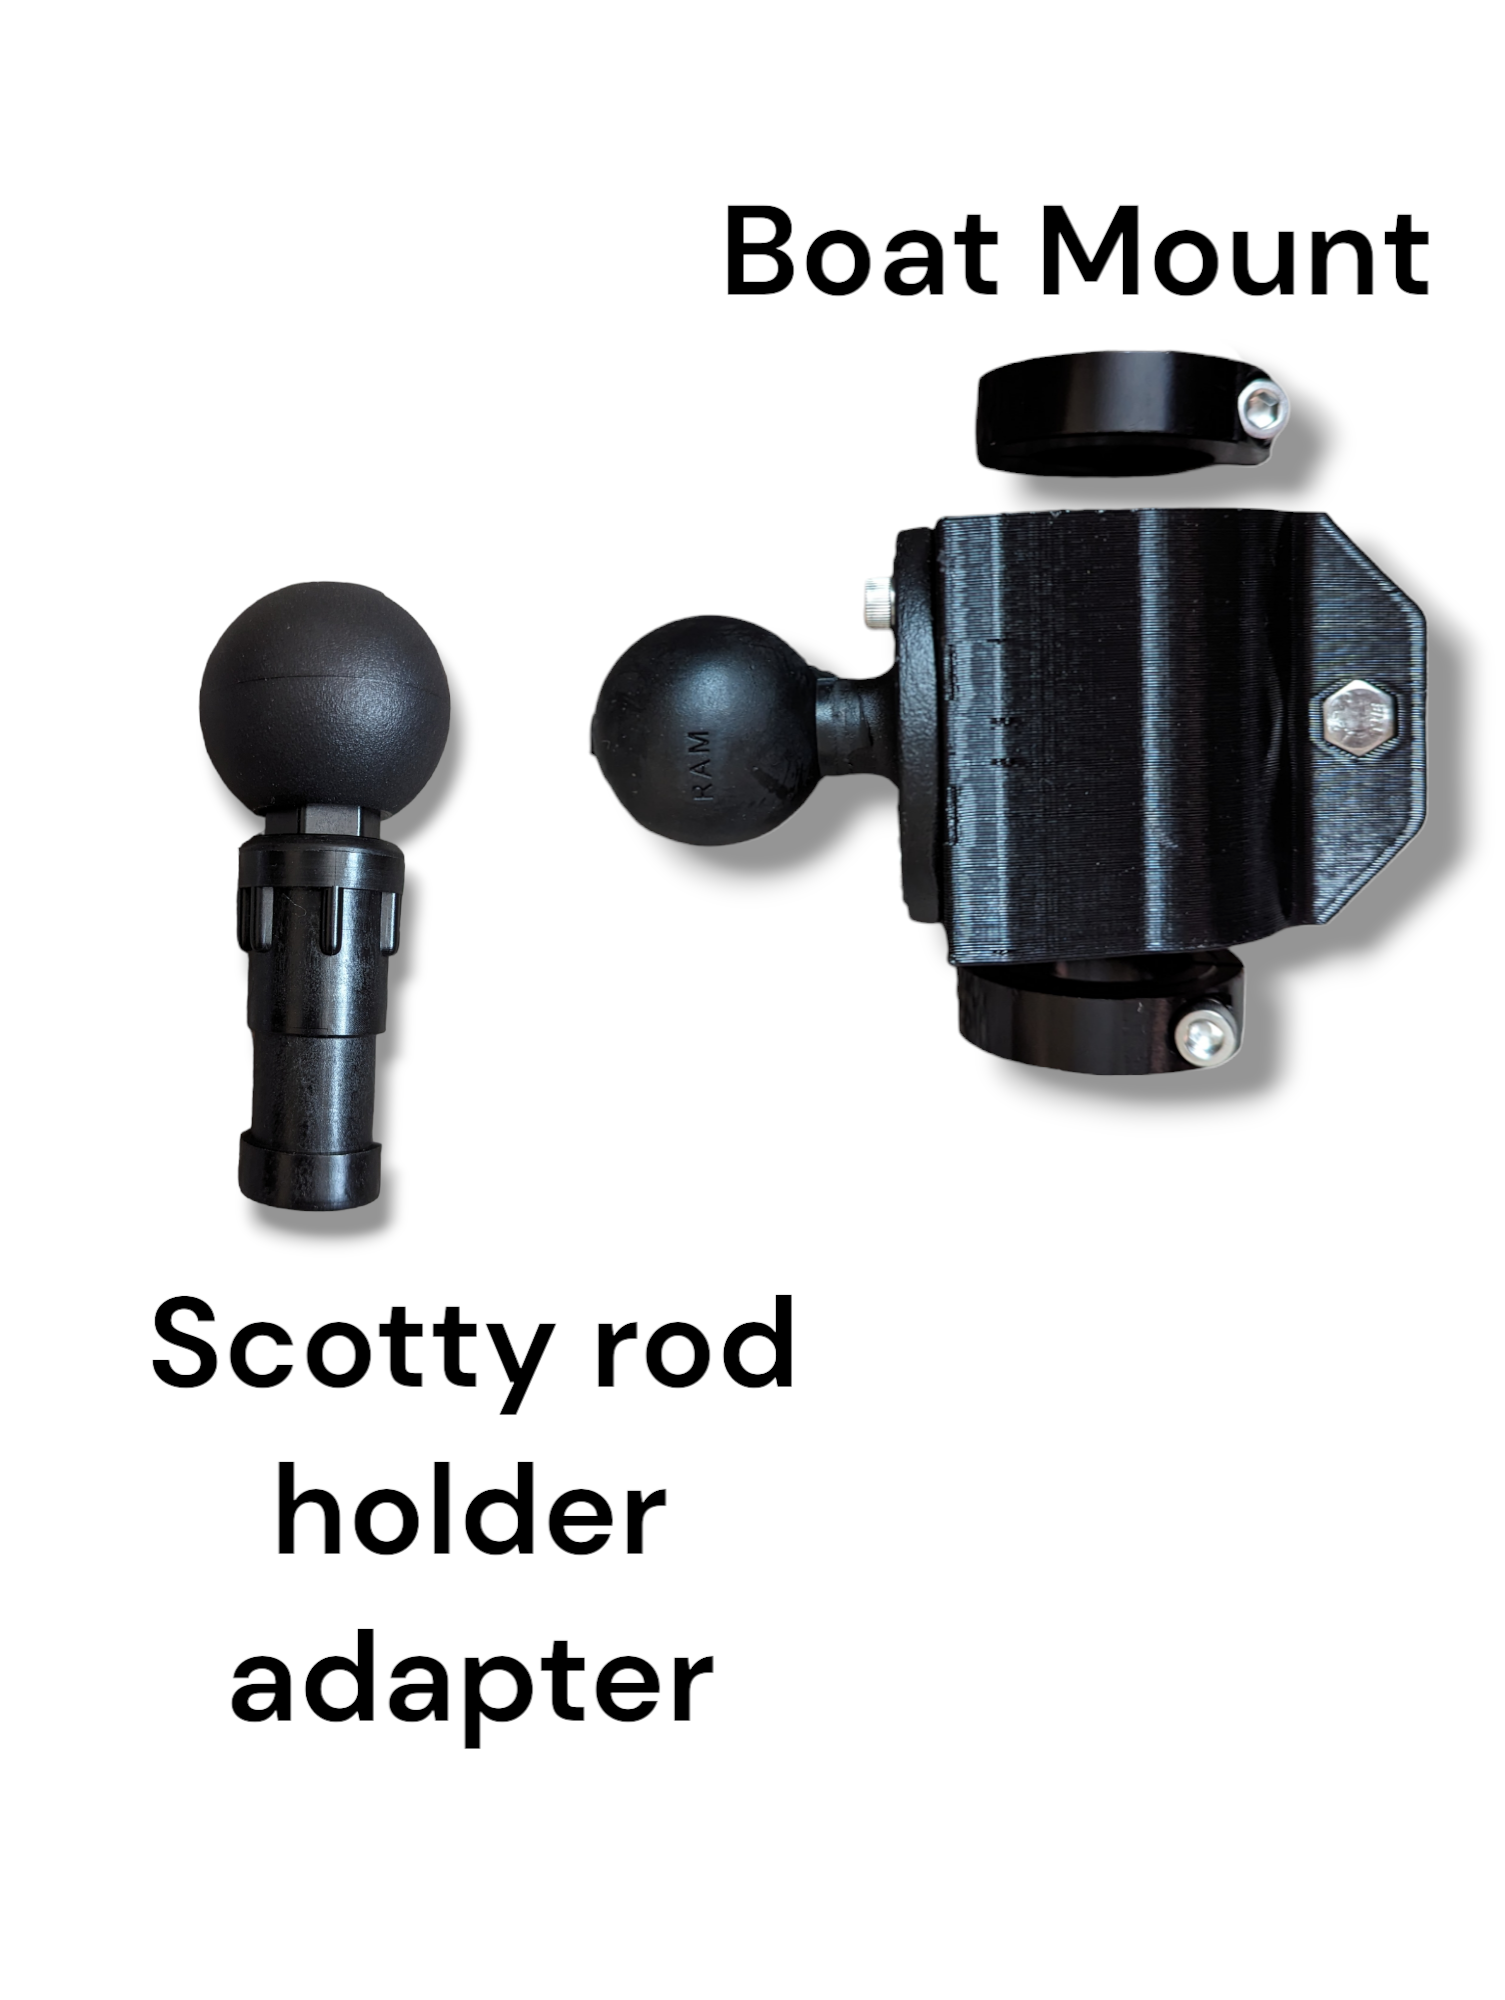 Summit Boat Mount Kit – Summit Fishing Equipment